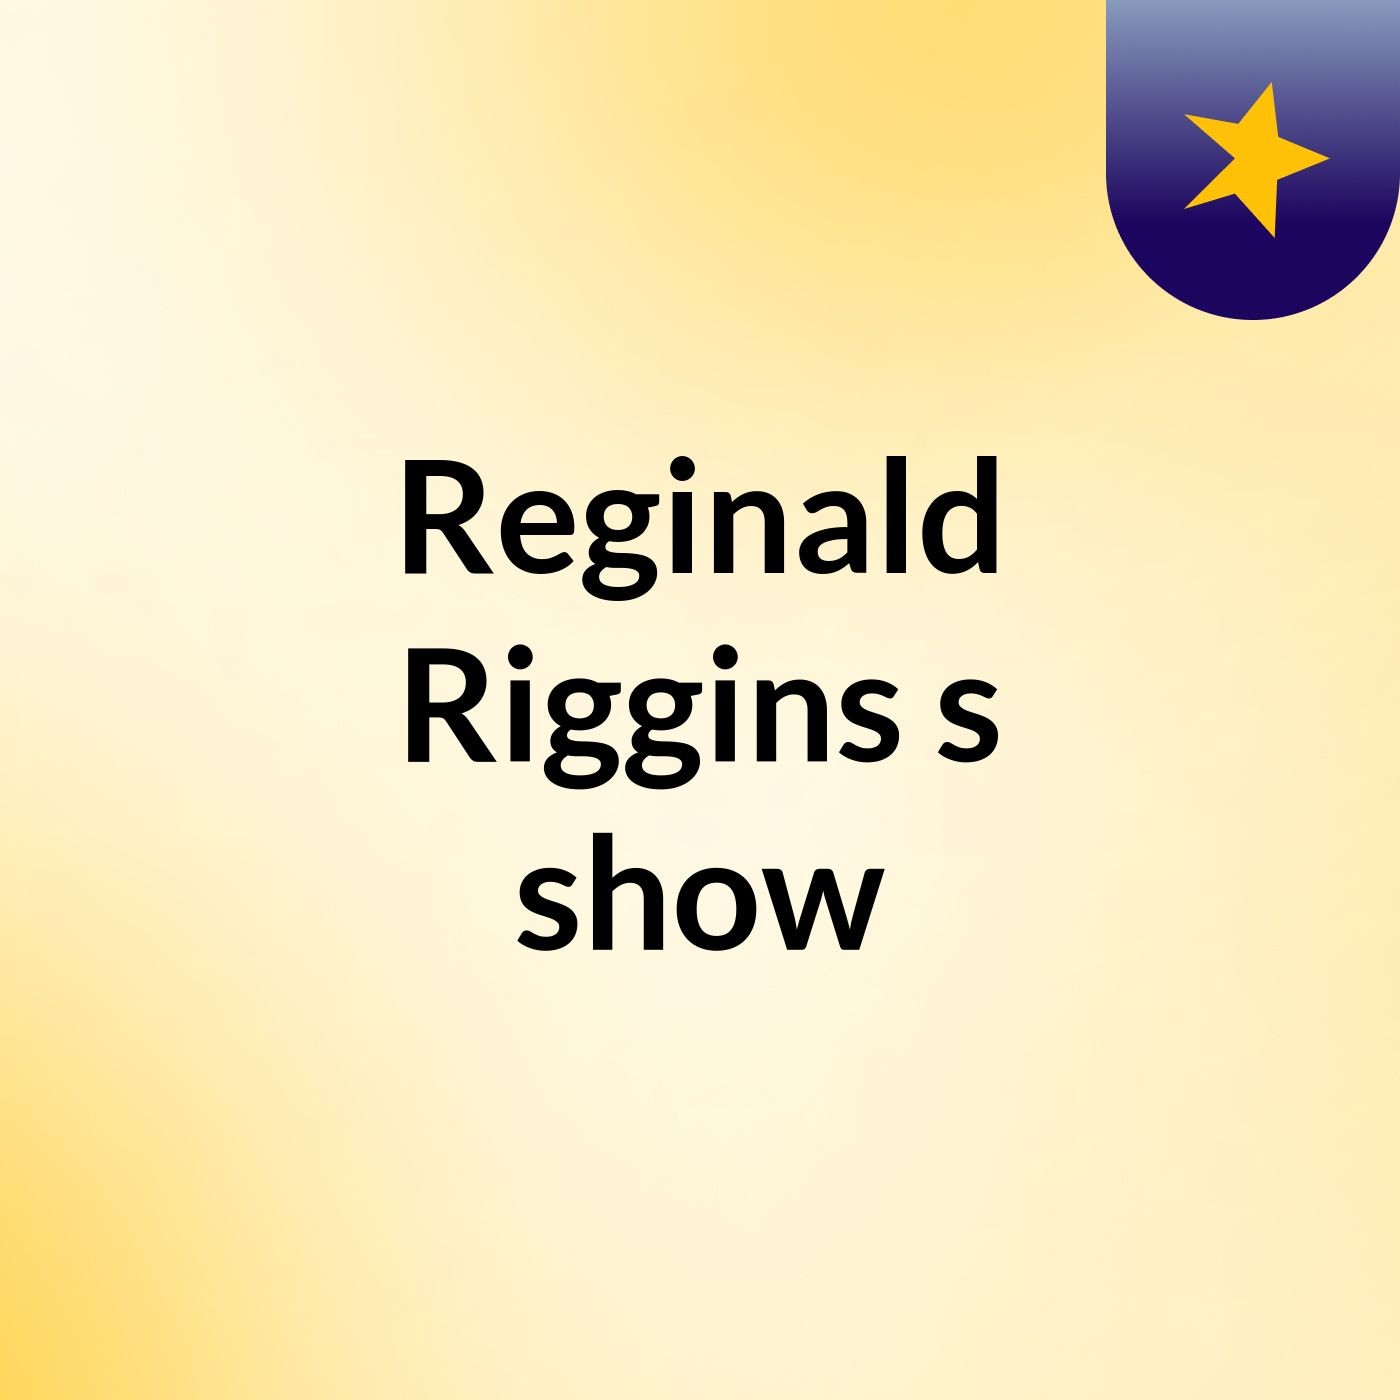 Reginald Riggins's show